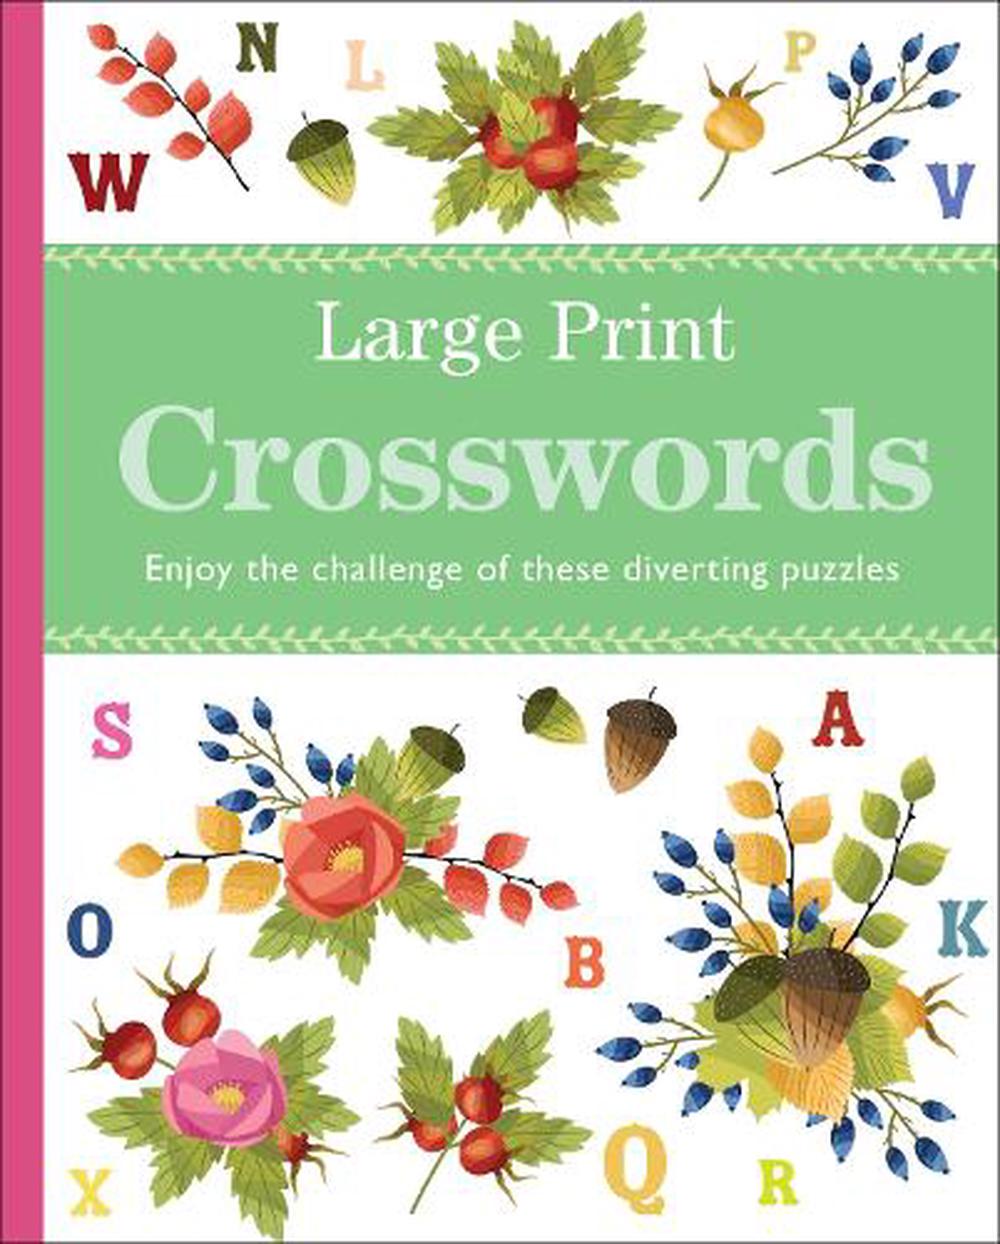 printing crosswords